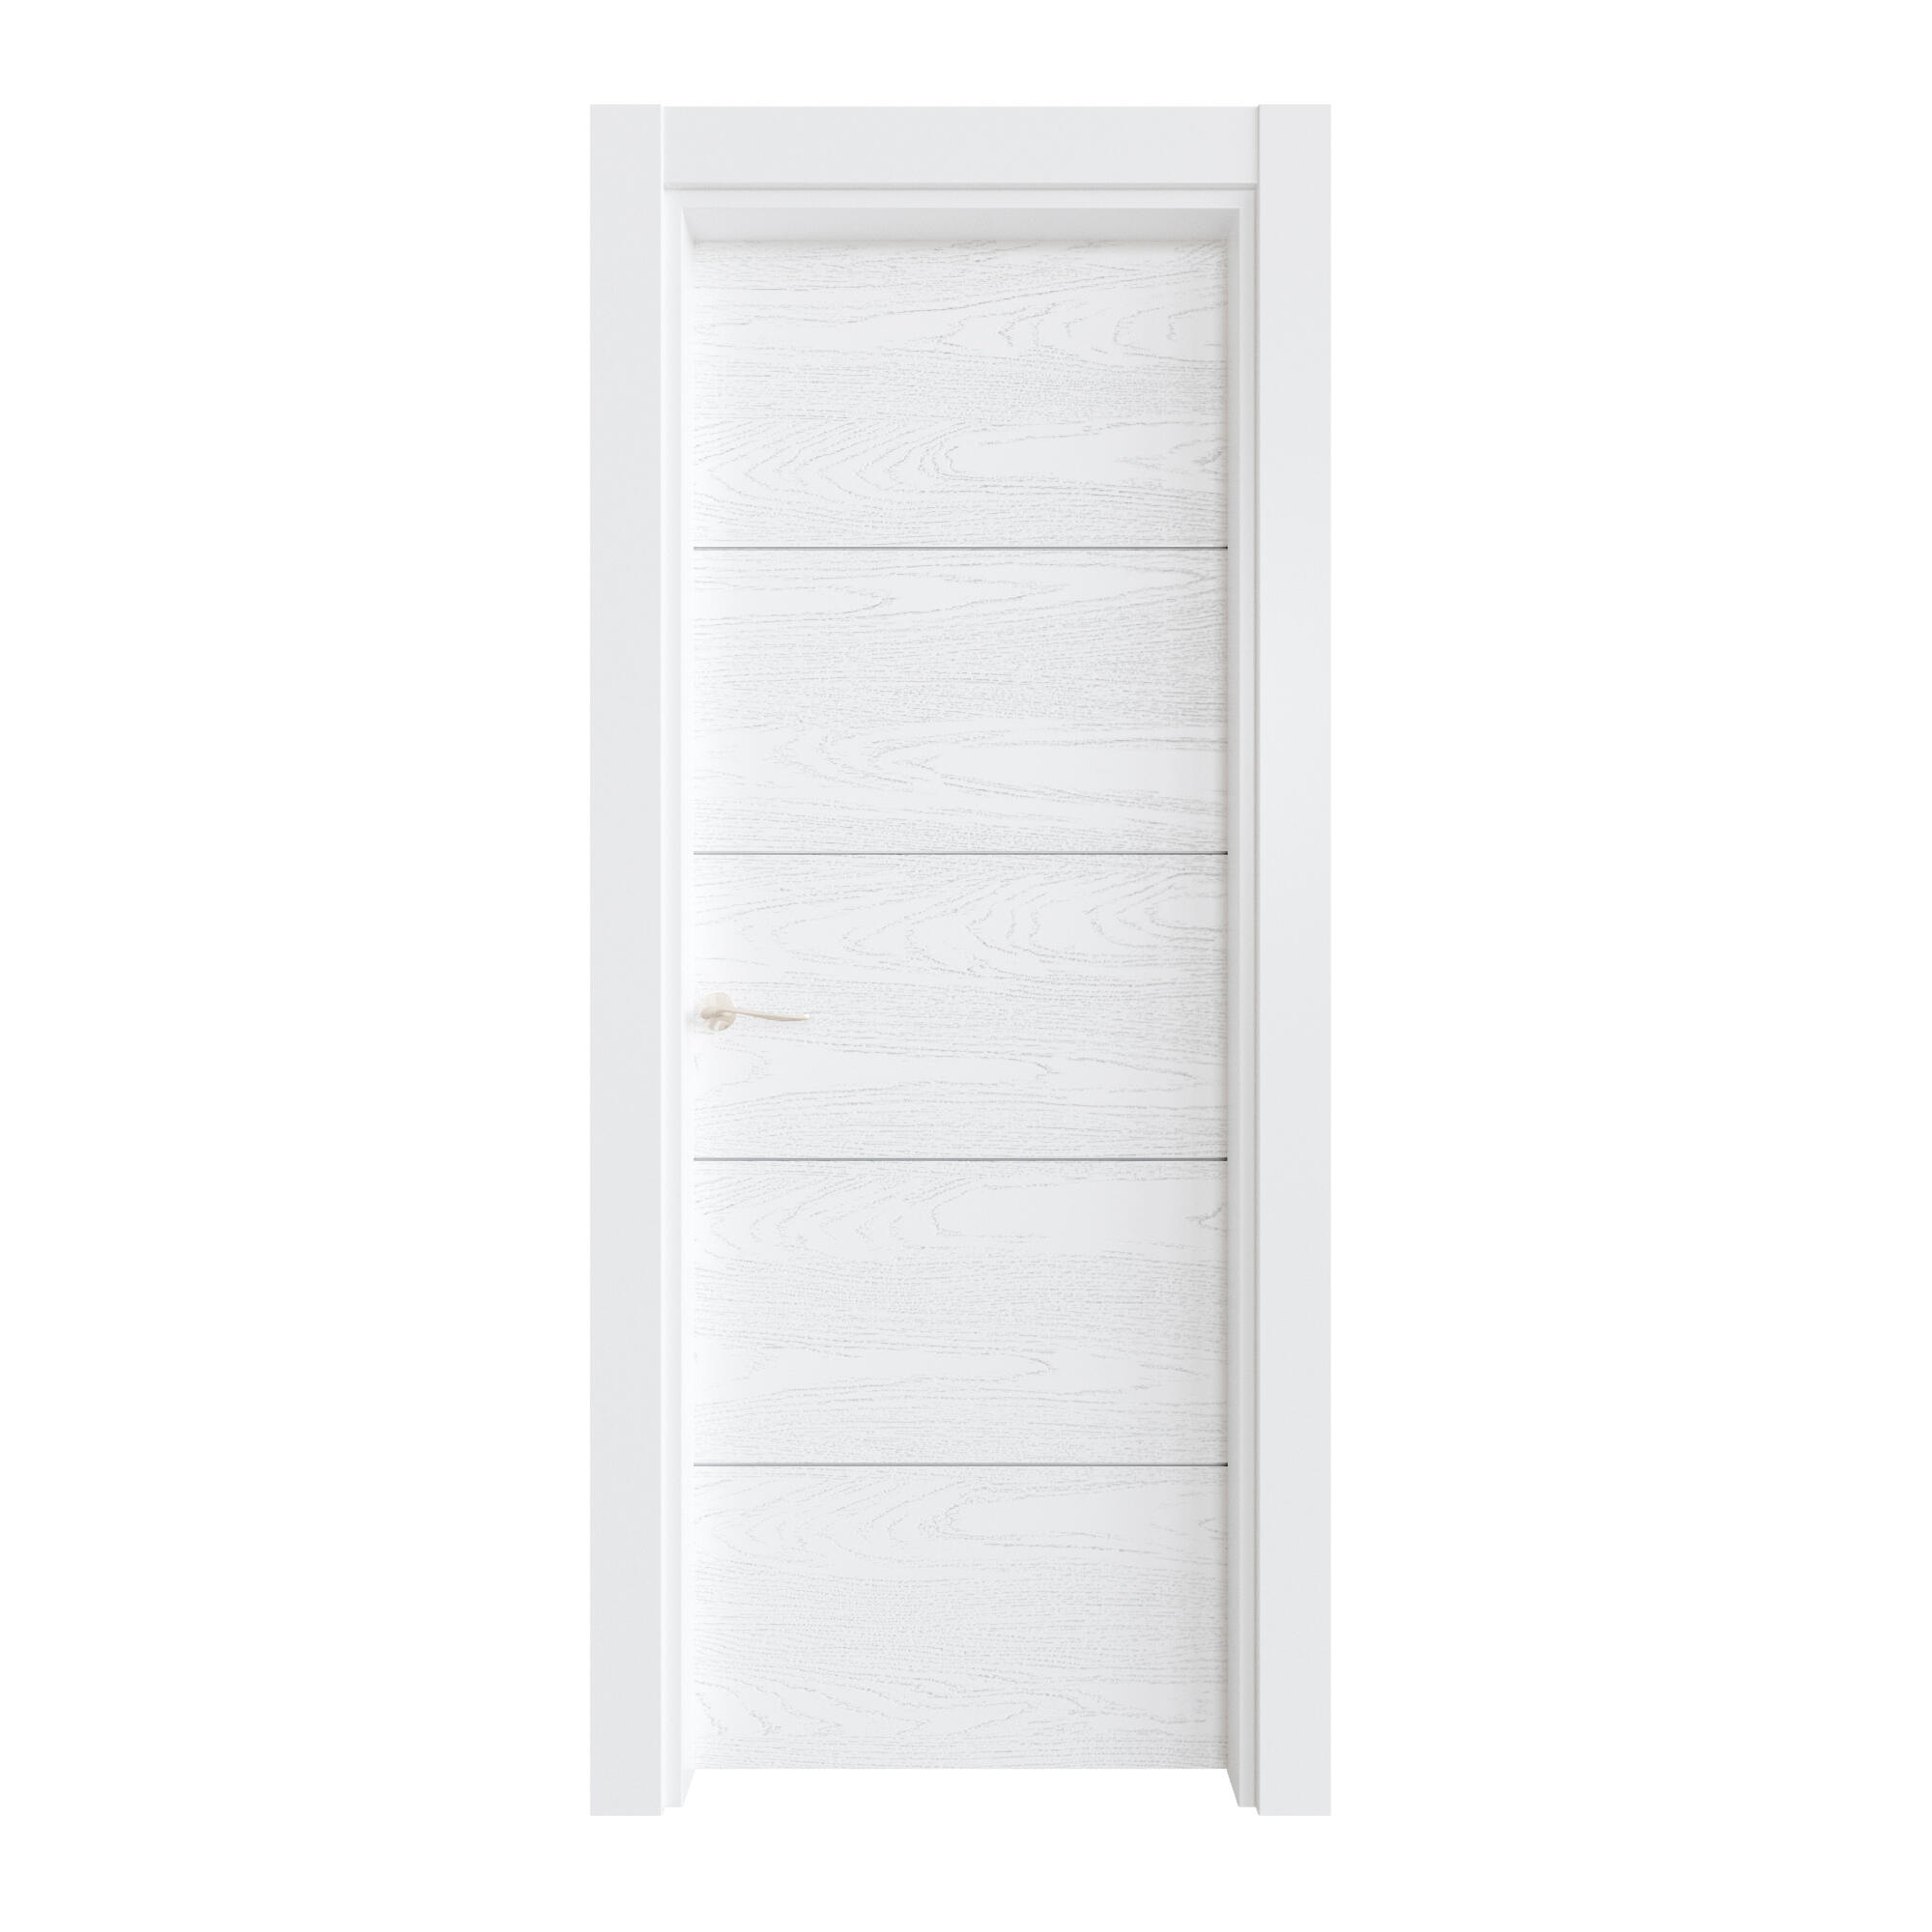 Puerta ciega lucerna premium blanca i 9x72,5 cm